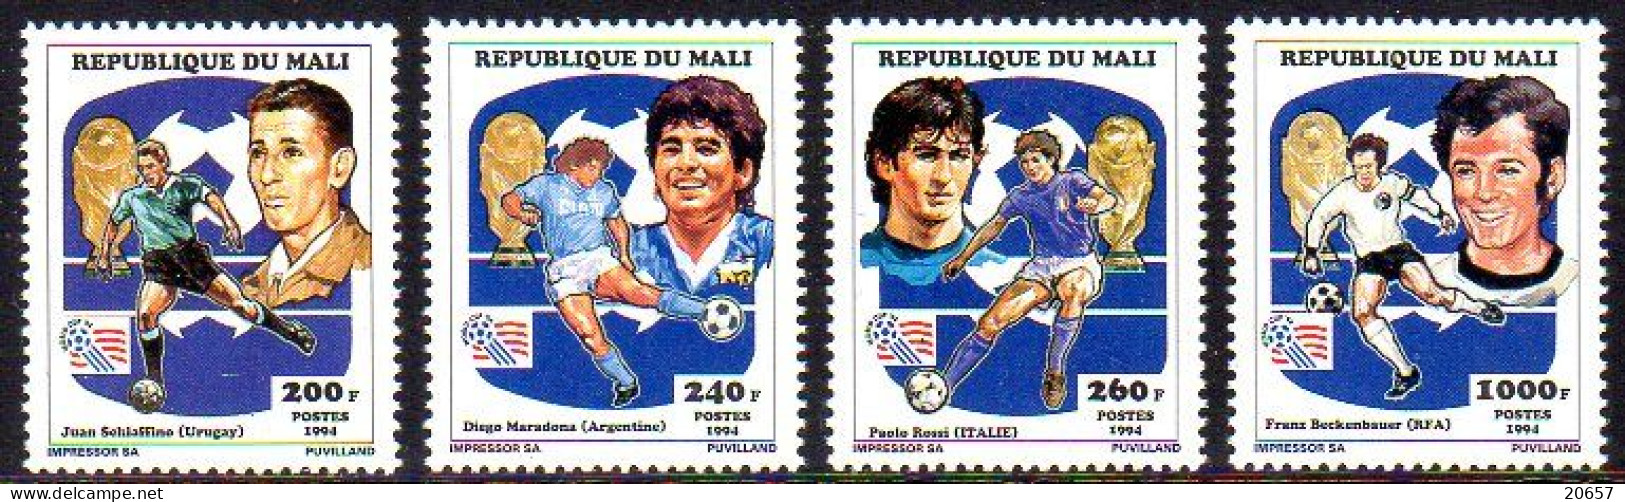 Mali 0602/05 Mondial Football USA 94, Joueurs Uruguay, Argentina, Italia, Germany - 1994 – Vereinigte Staaten